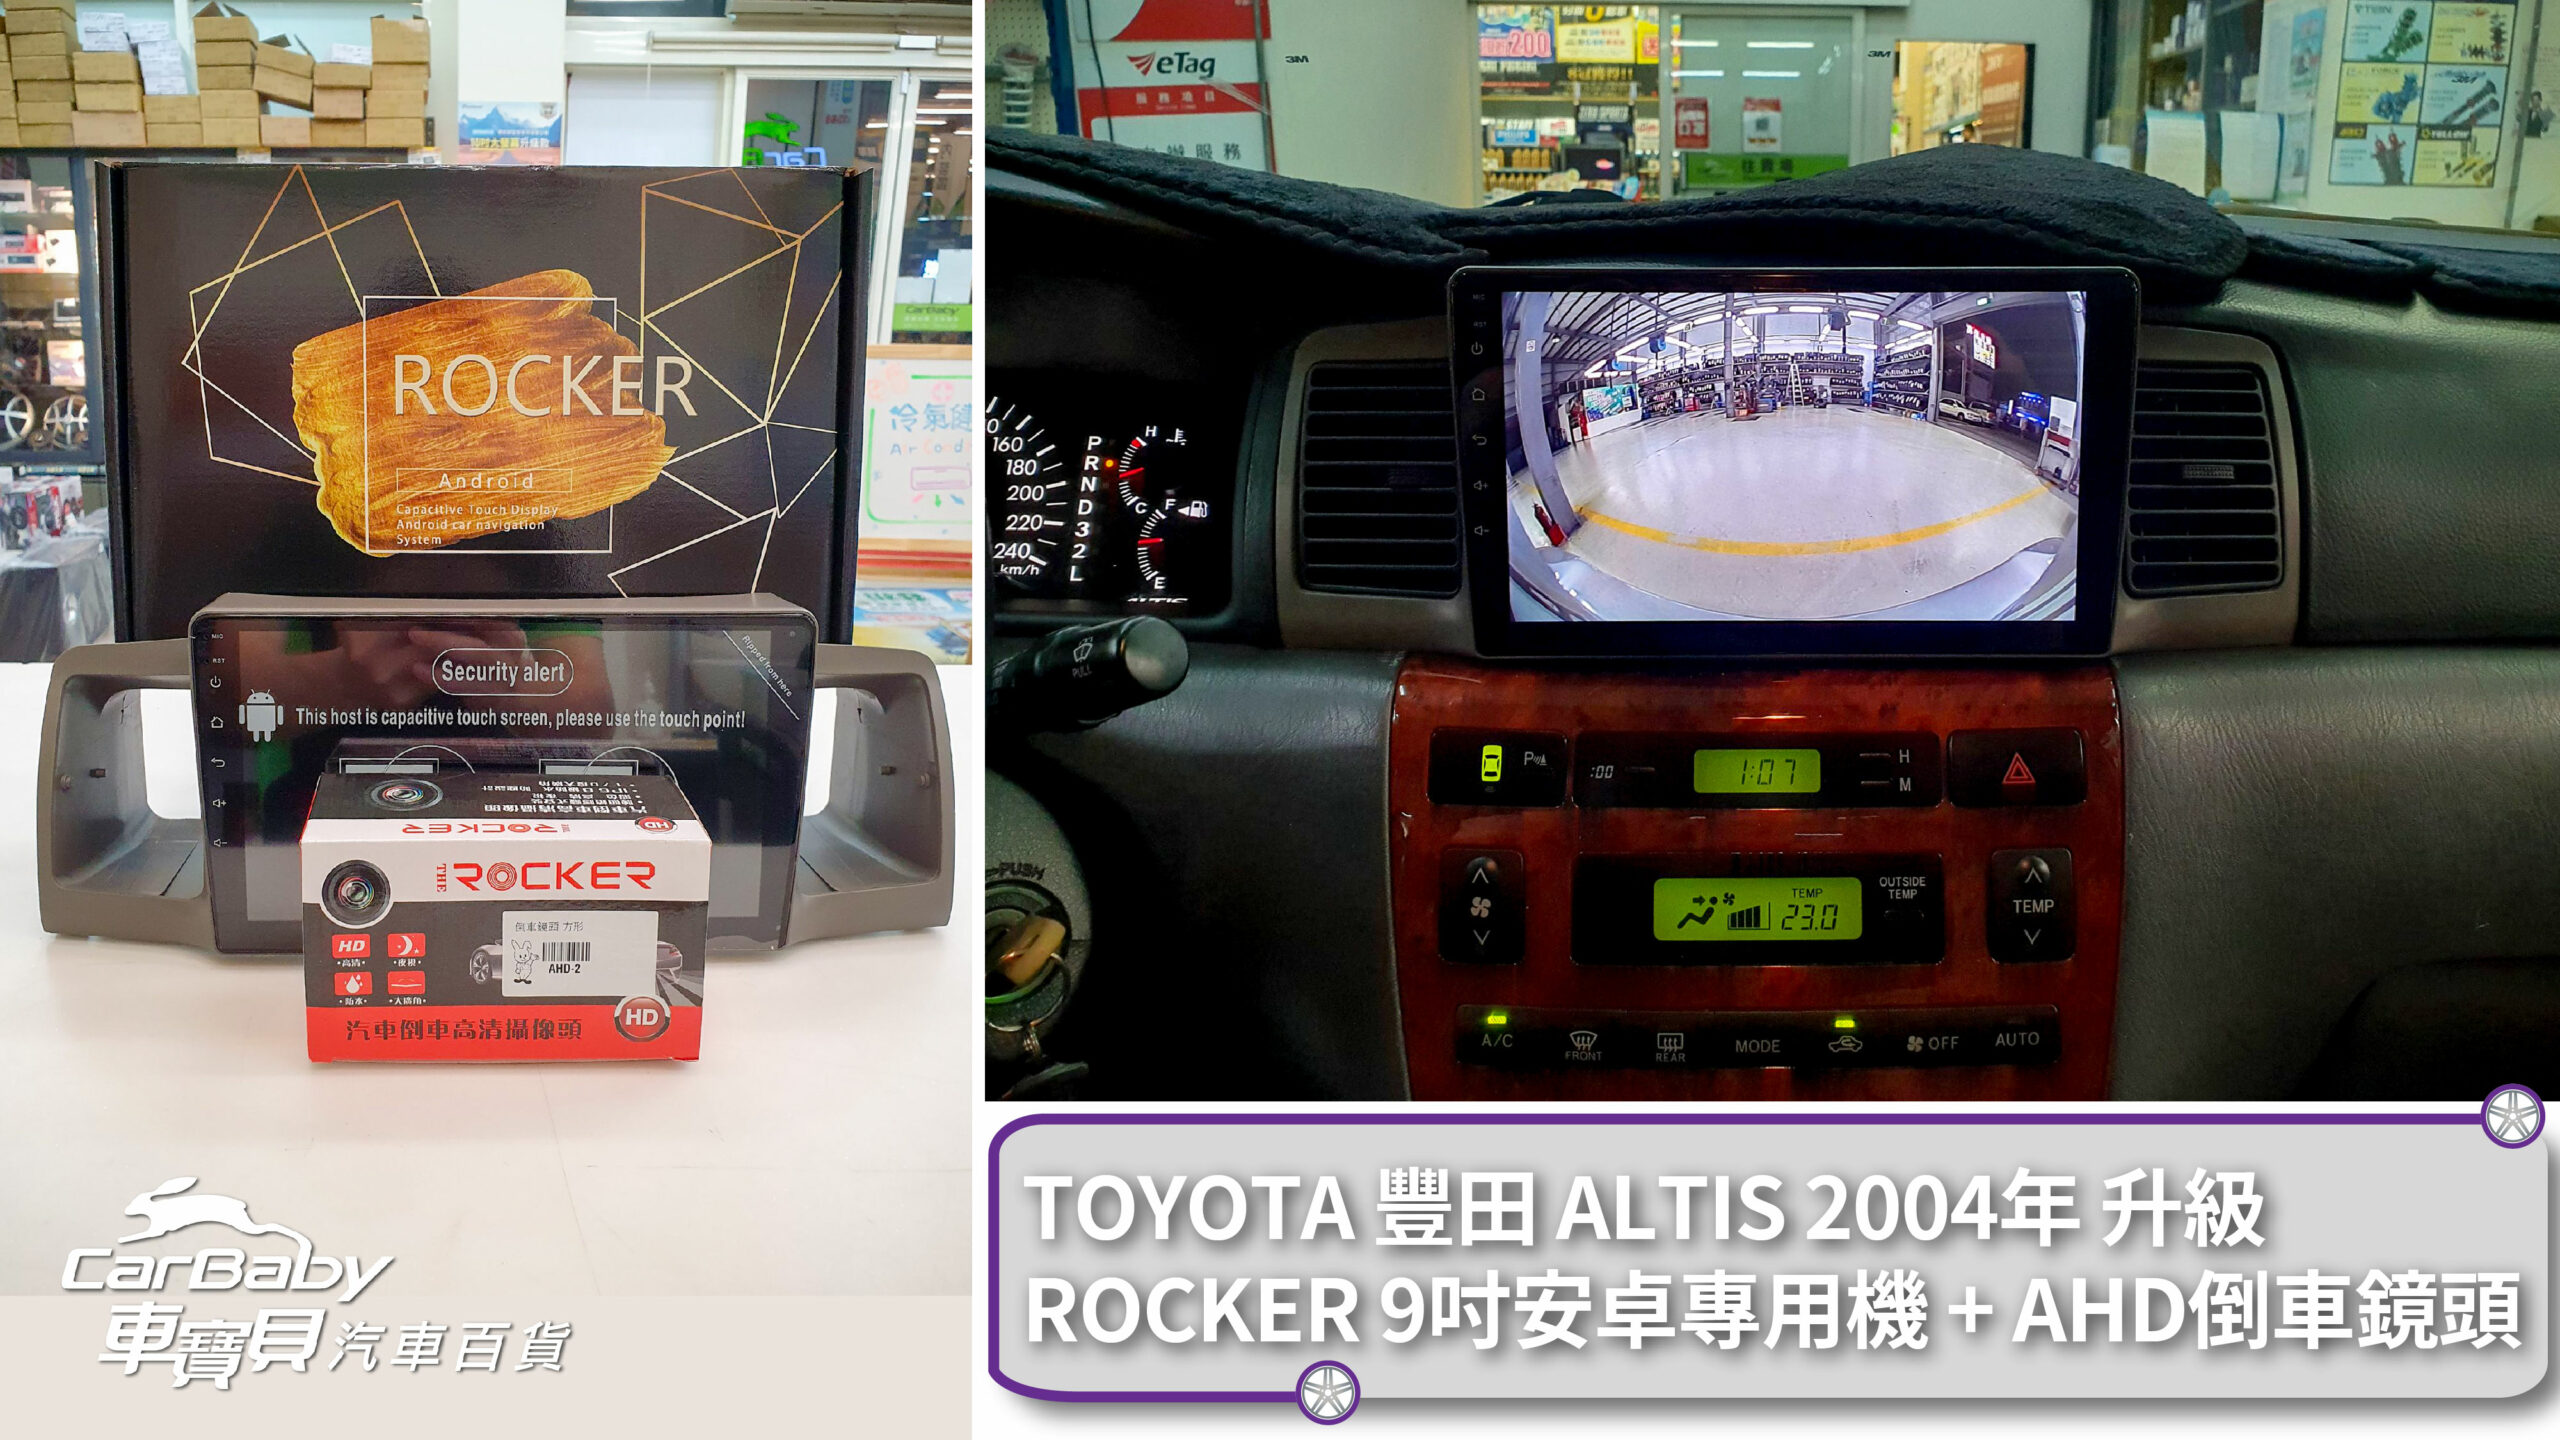 TOYOTA 豐田 ALTIS 2004年 升級 ROCKER 9吋安卓專用機 + AHD倒車鏡頭